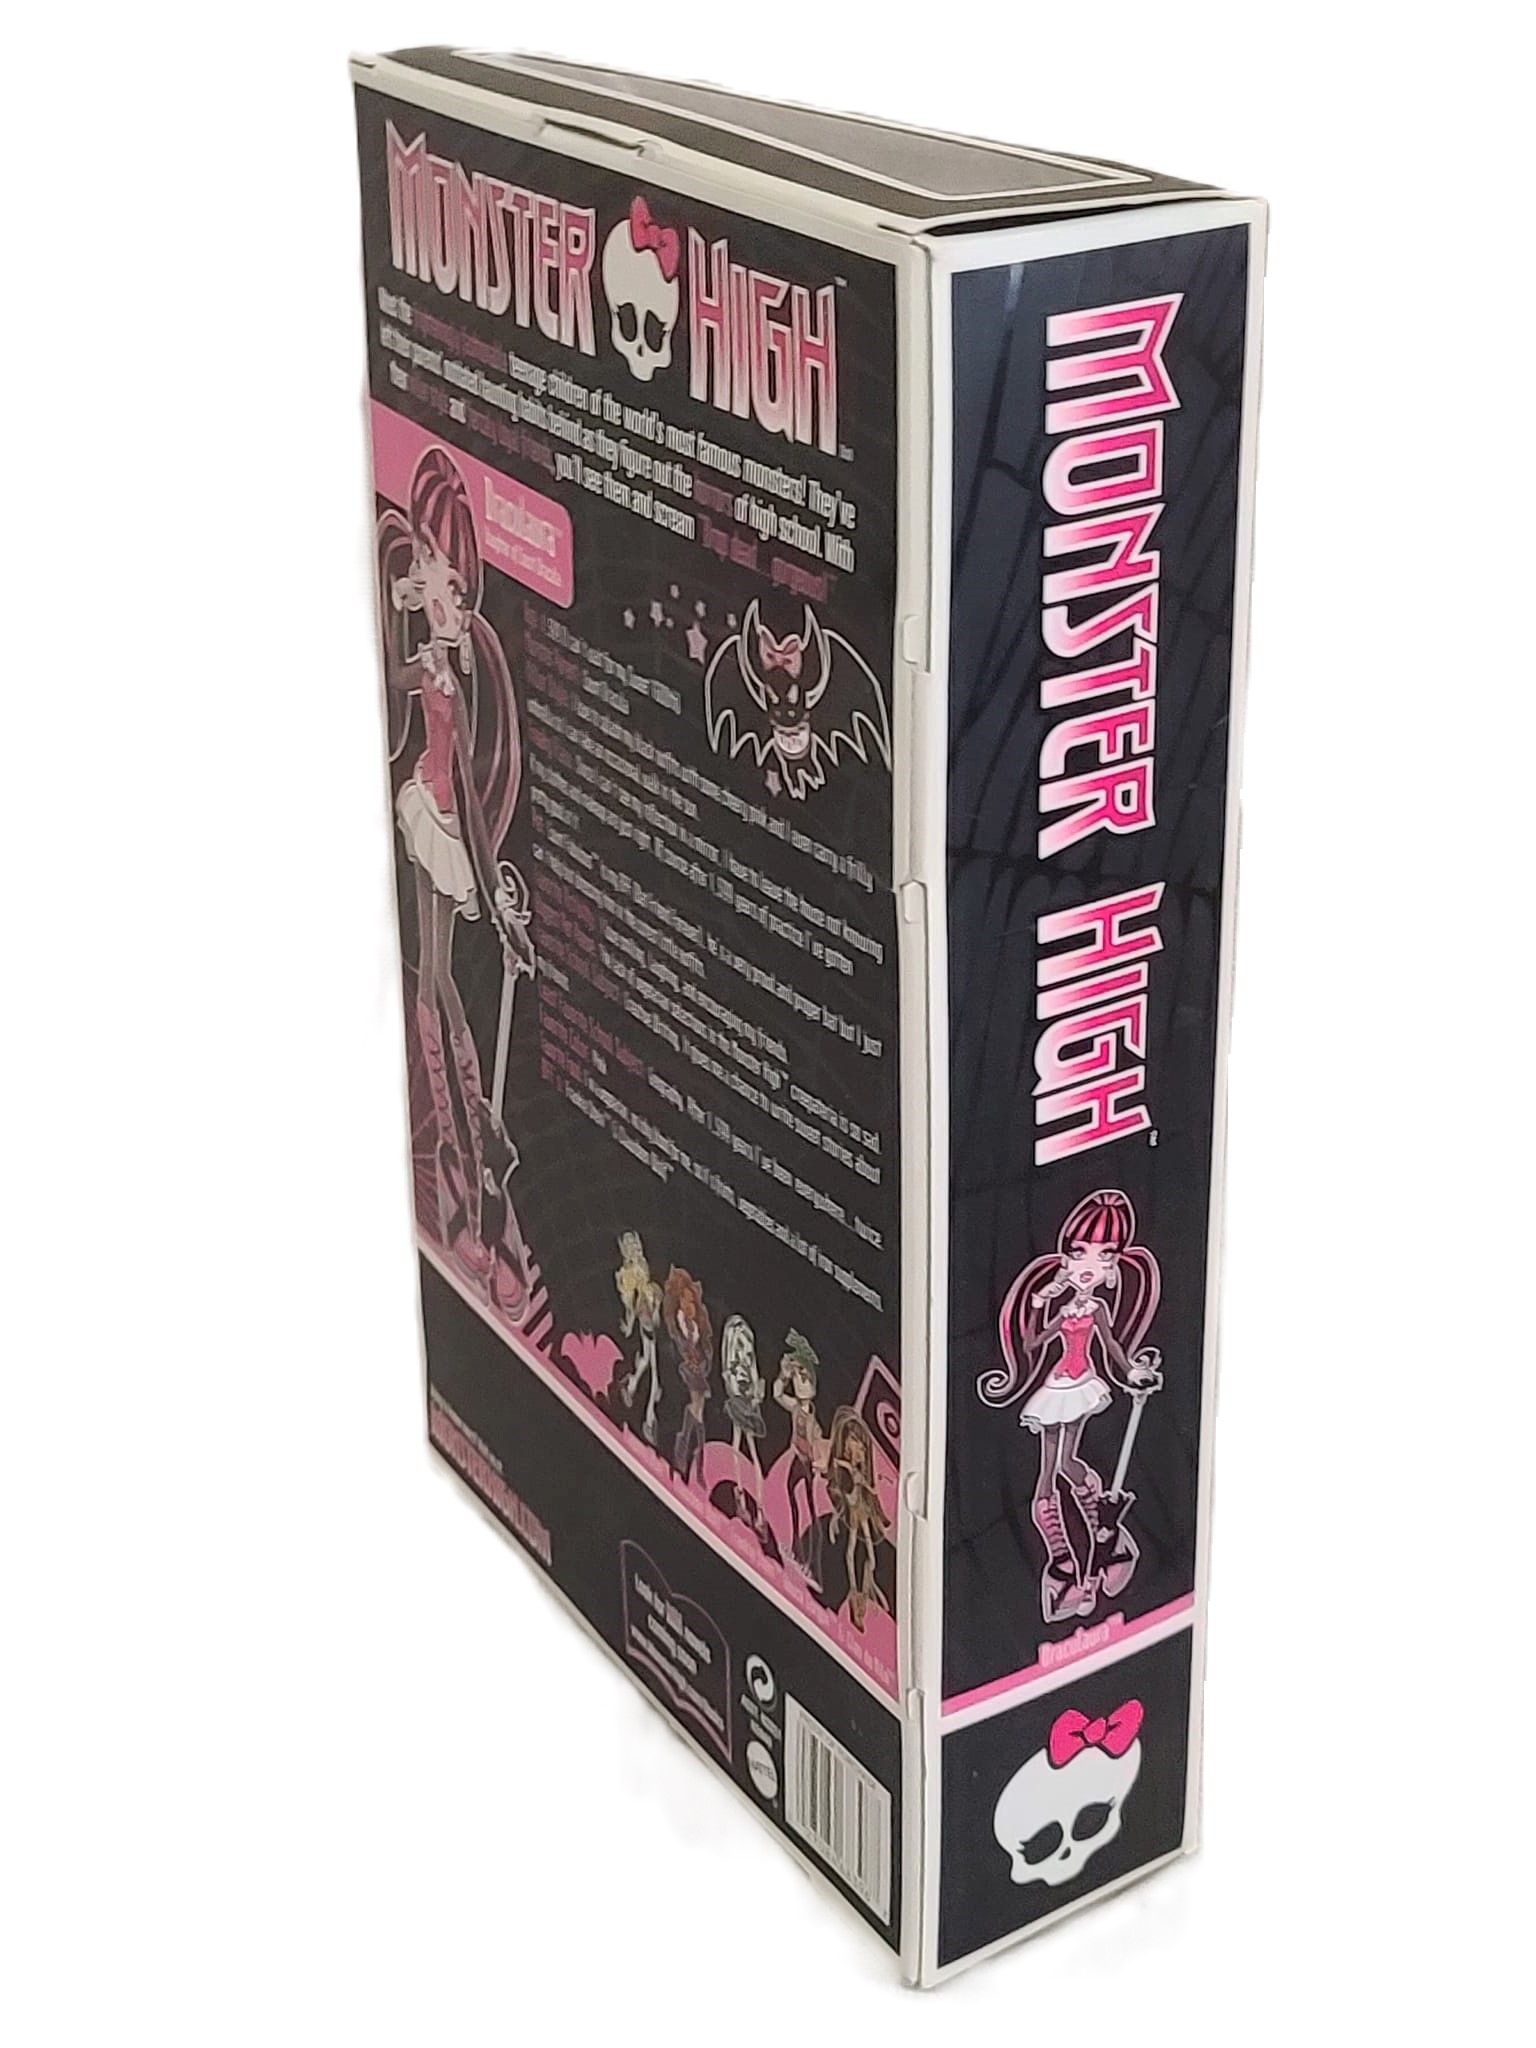 Mattel Monster High Draculaura Count Fabulous First Edition 2009